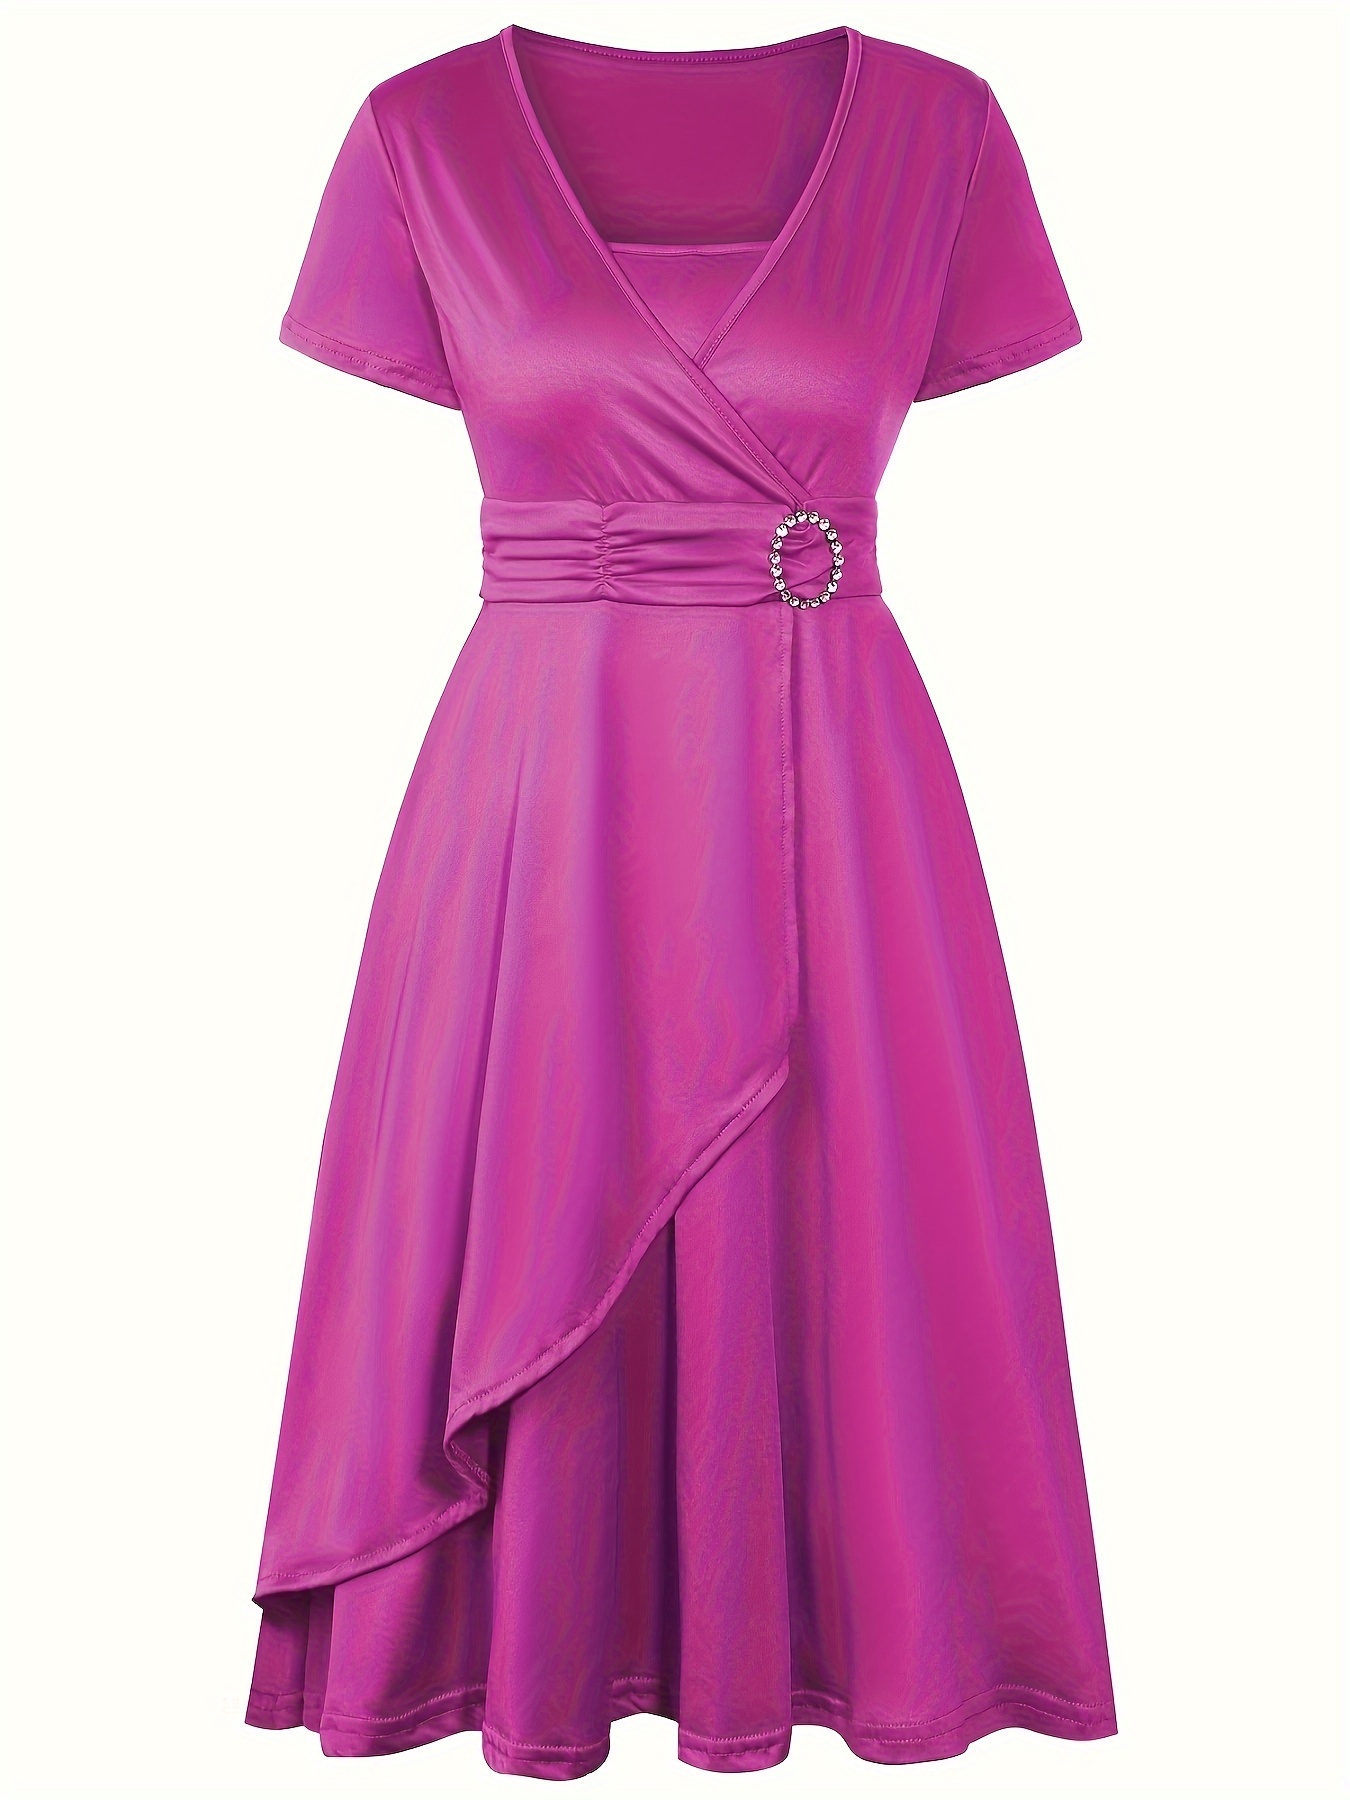 elegant skinny rhinestoned dress asymmetrical hem tie waist dress for party banquet womens clothing